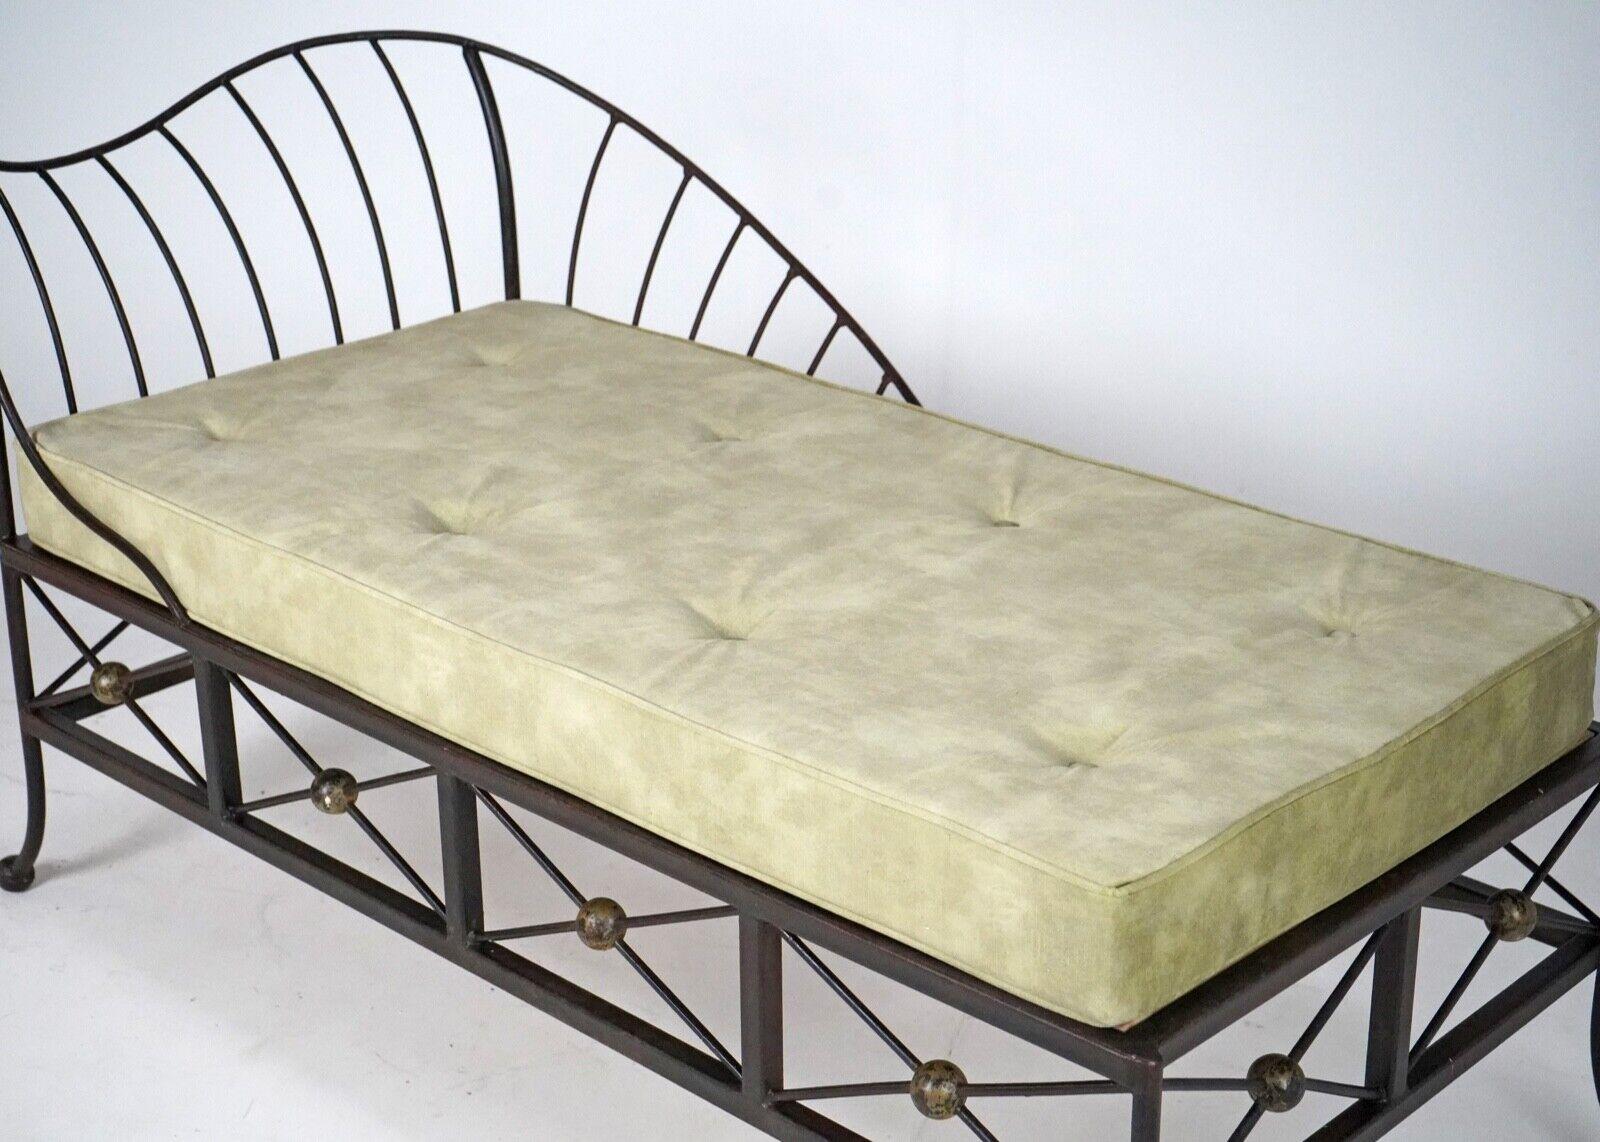 Vintage Französisch Box Stahl Metall Day Bed, Sun Lounger, Chaise Lounge Green Seat 10